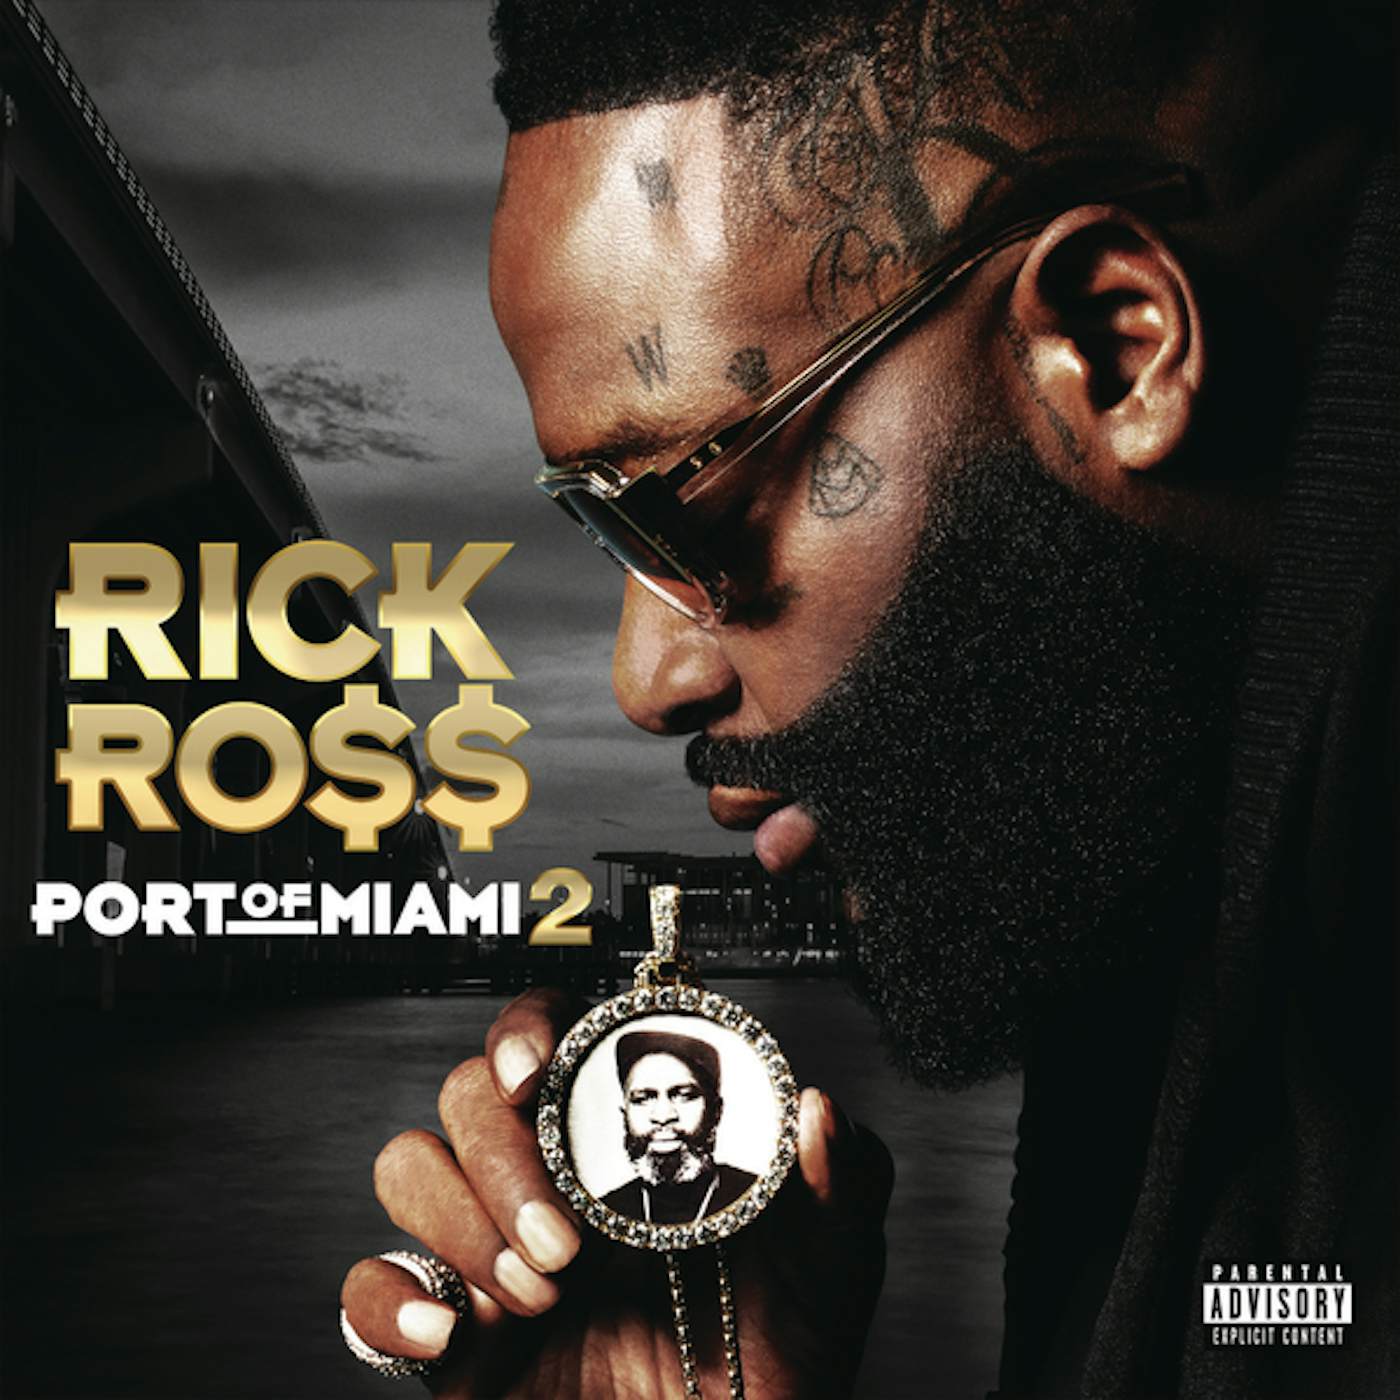 Rick Ross PORT OF MIAMI 2 (X) CD